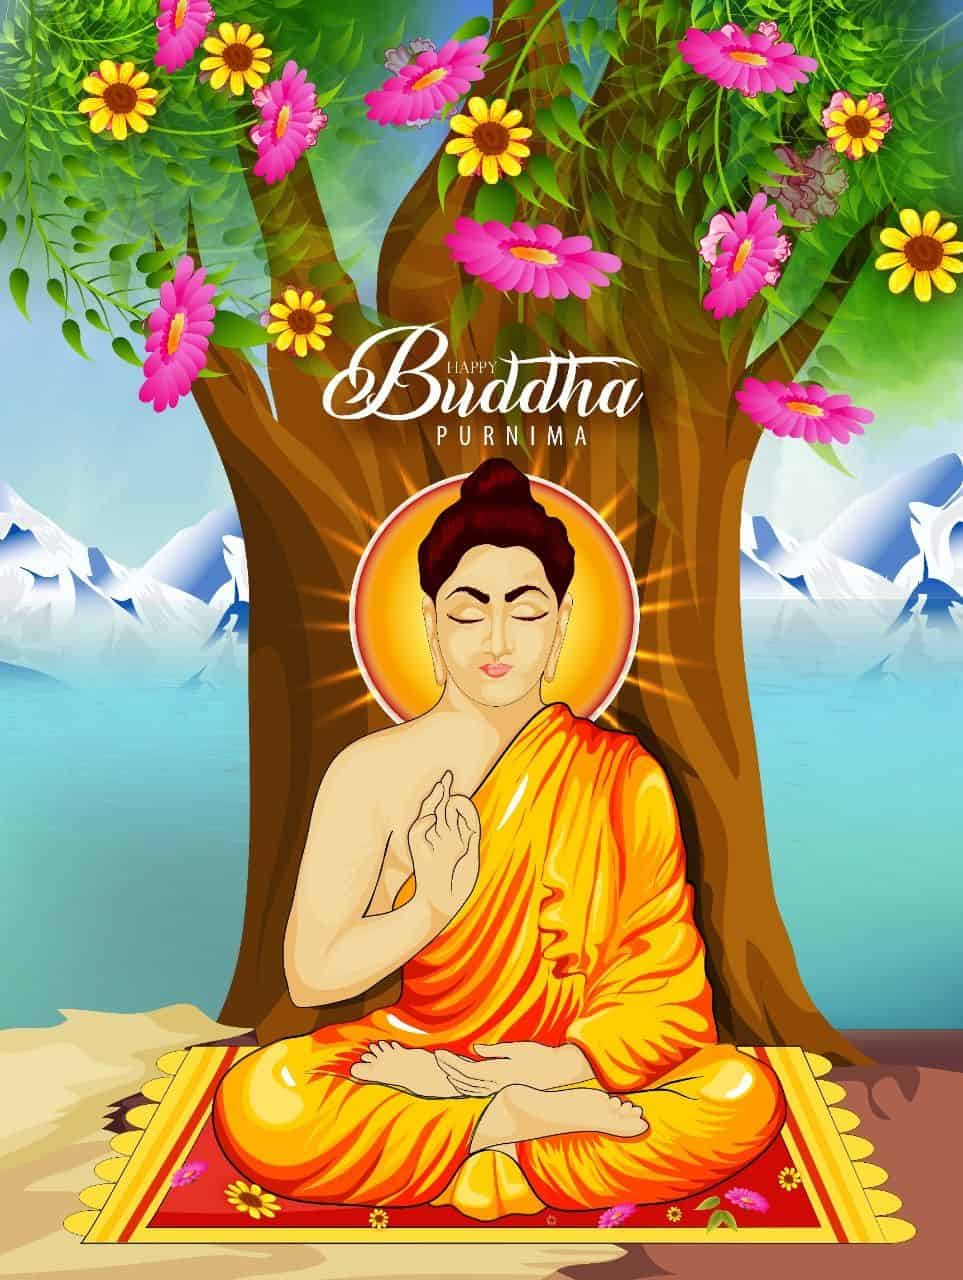 Lord Buddha Purnima Images